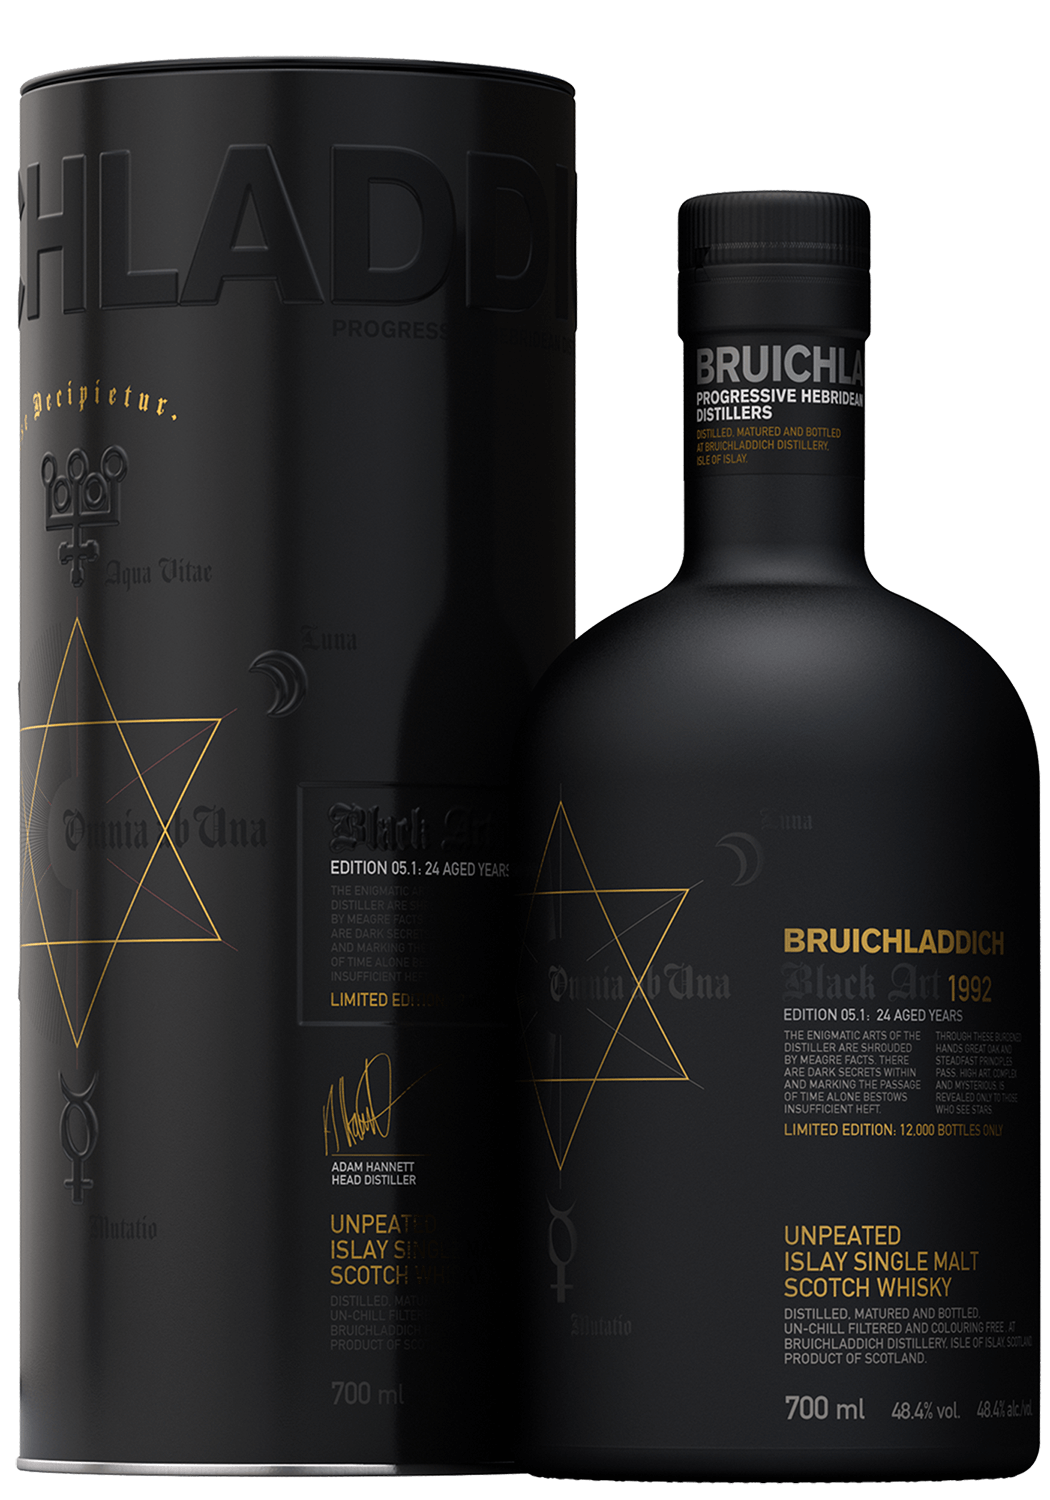 Bruichladdich Black Art Edition 05.1 24 aged years single malt scotch whisky (gift box)